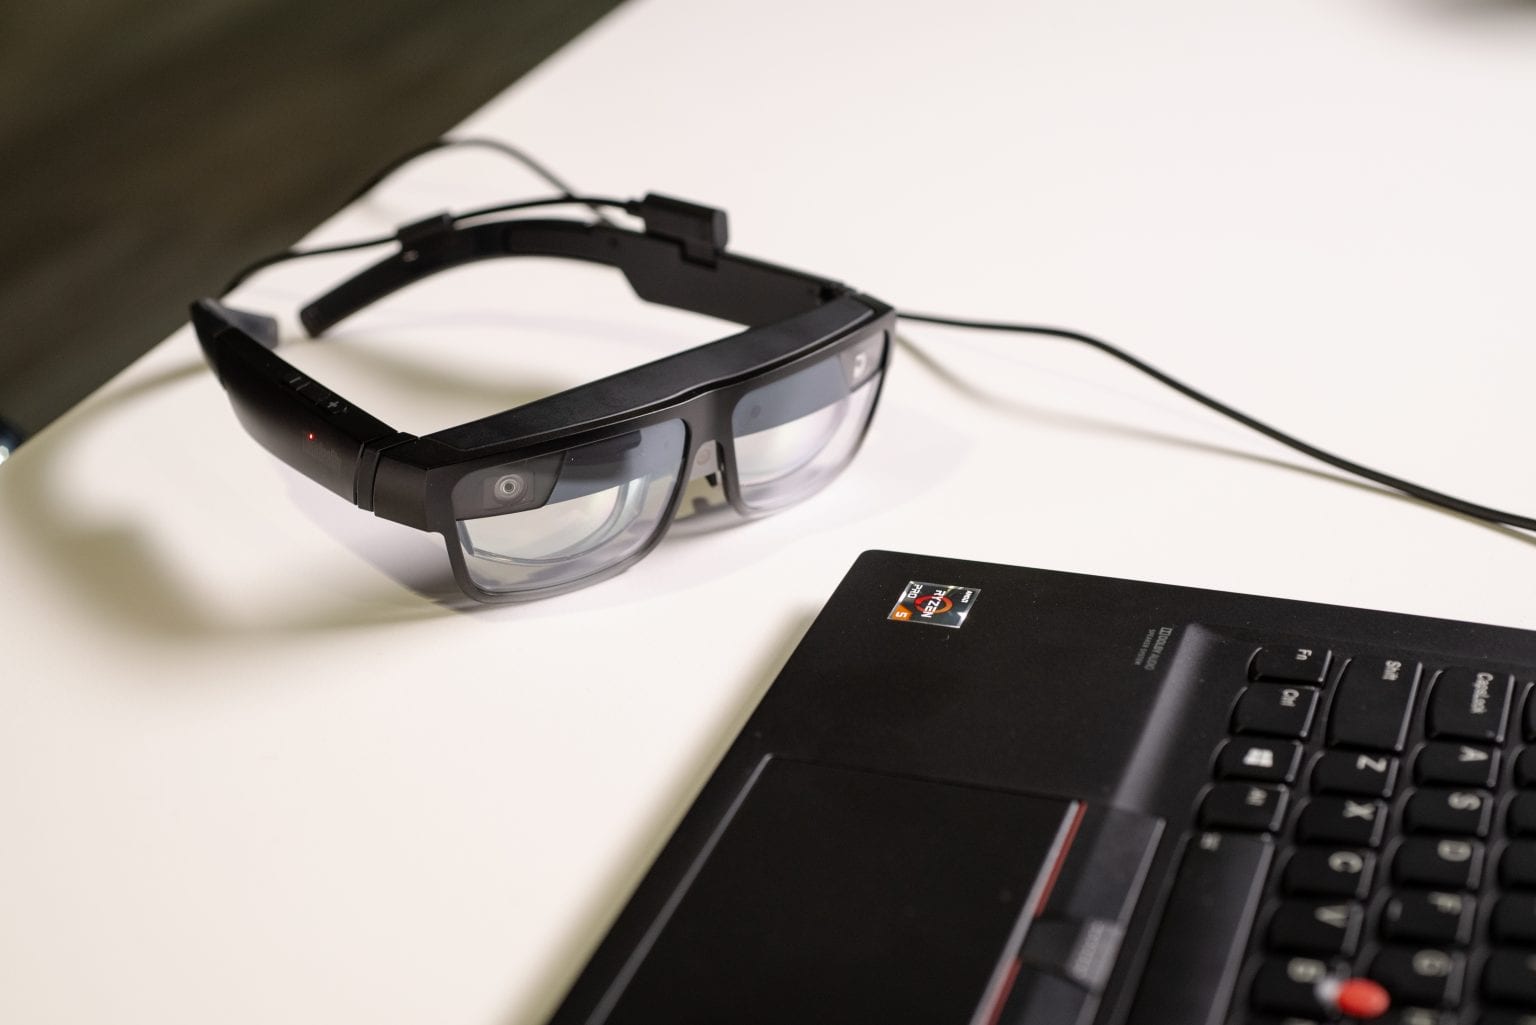 Productivity-enhancing smart glasses